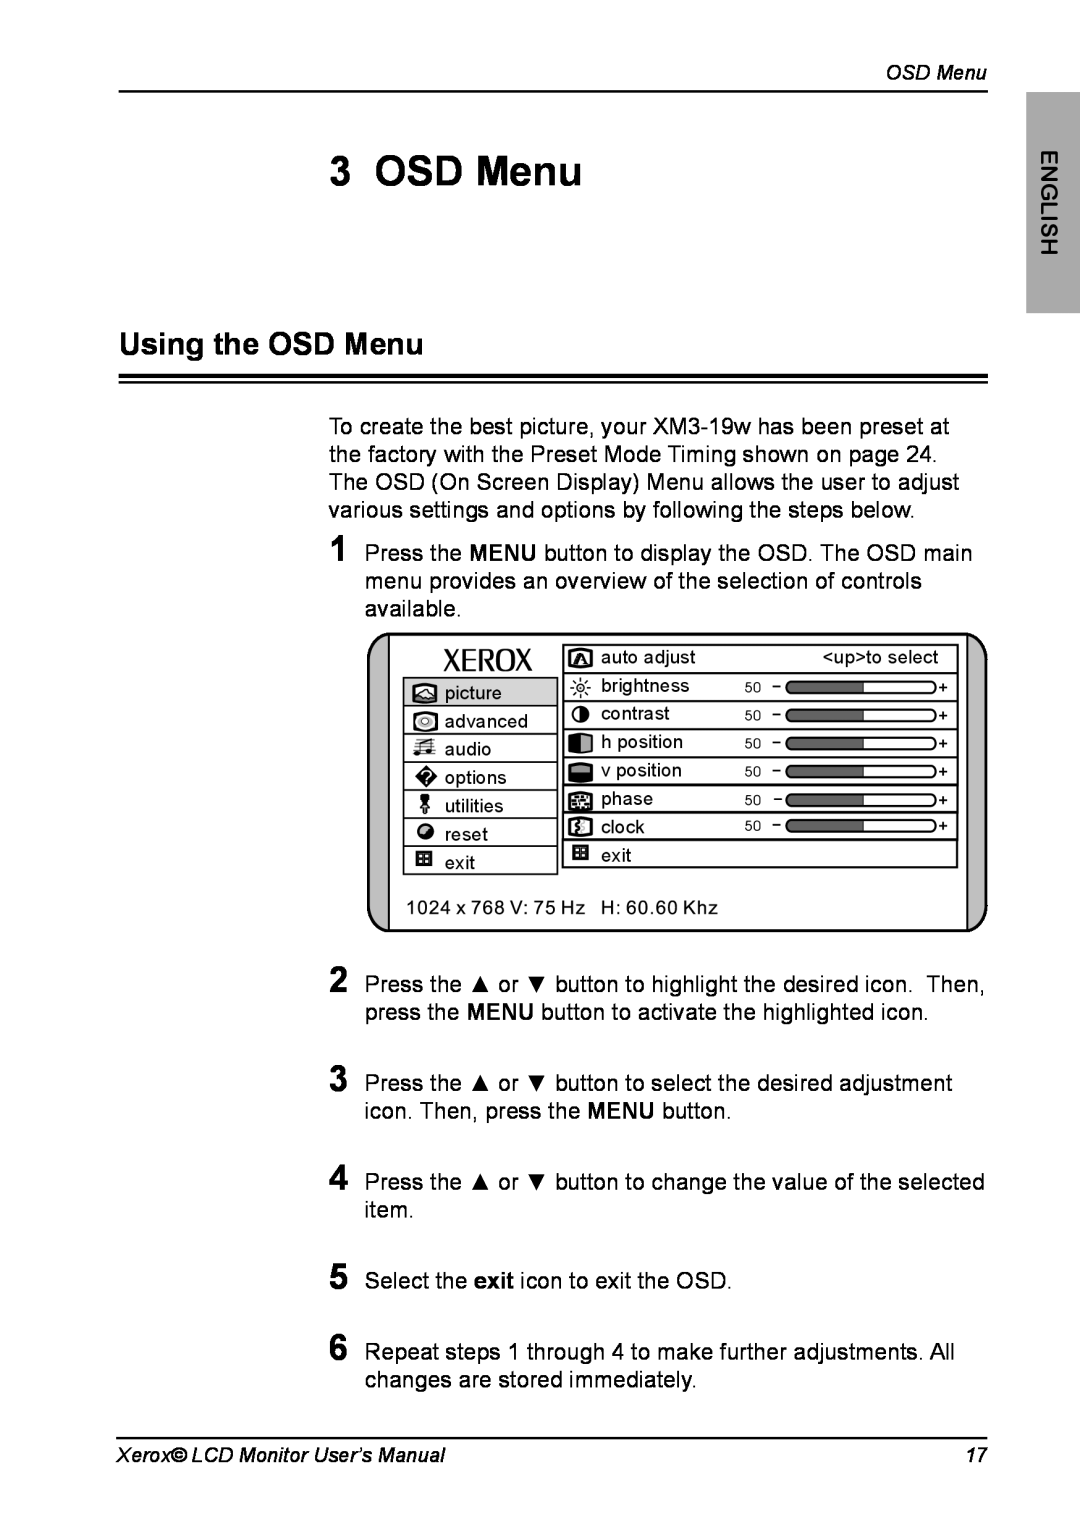 Xerox XM3-19w manual Using the OSD Menu, English 